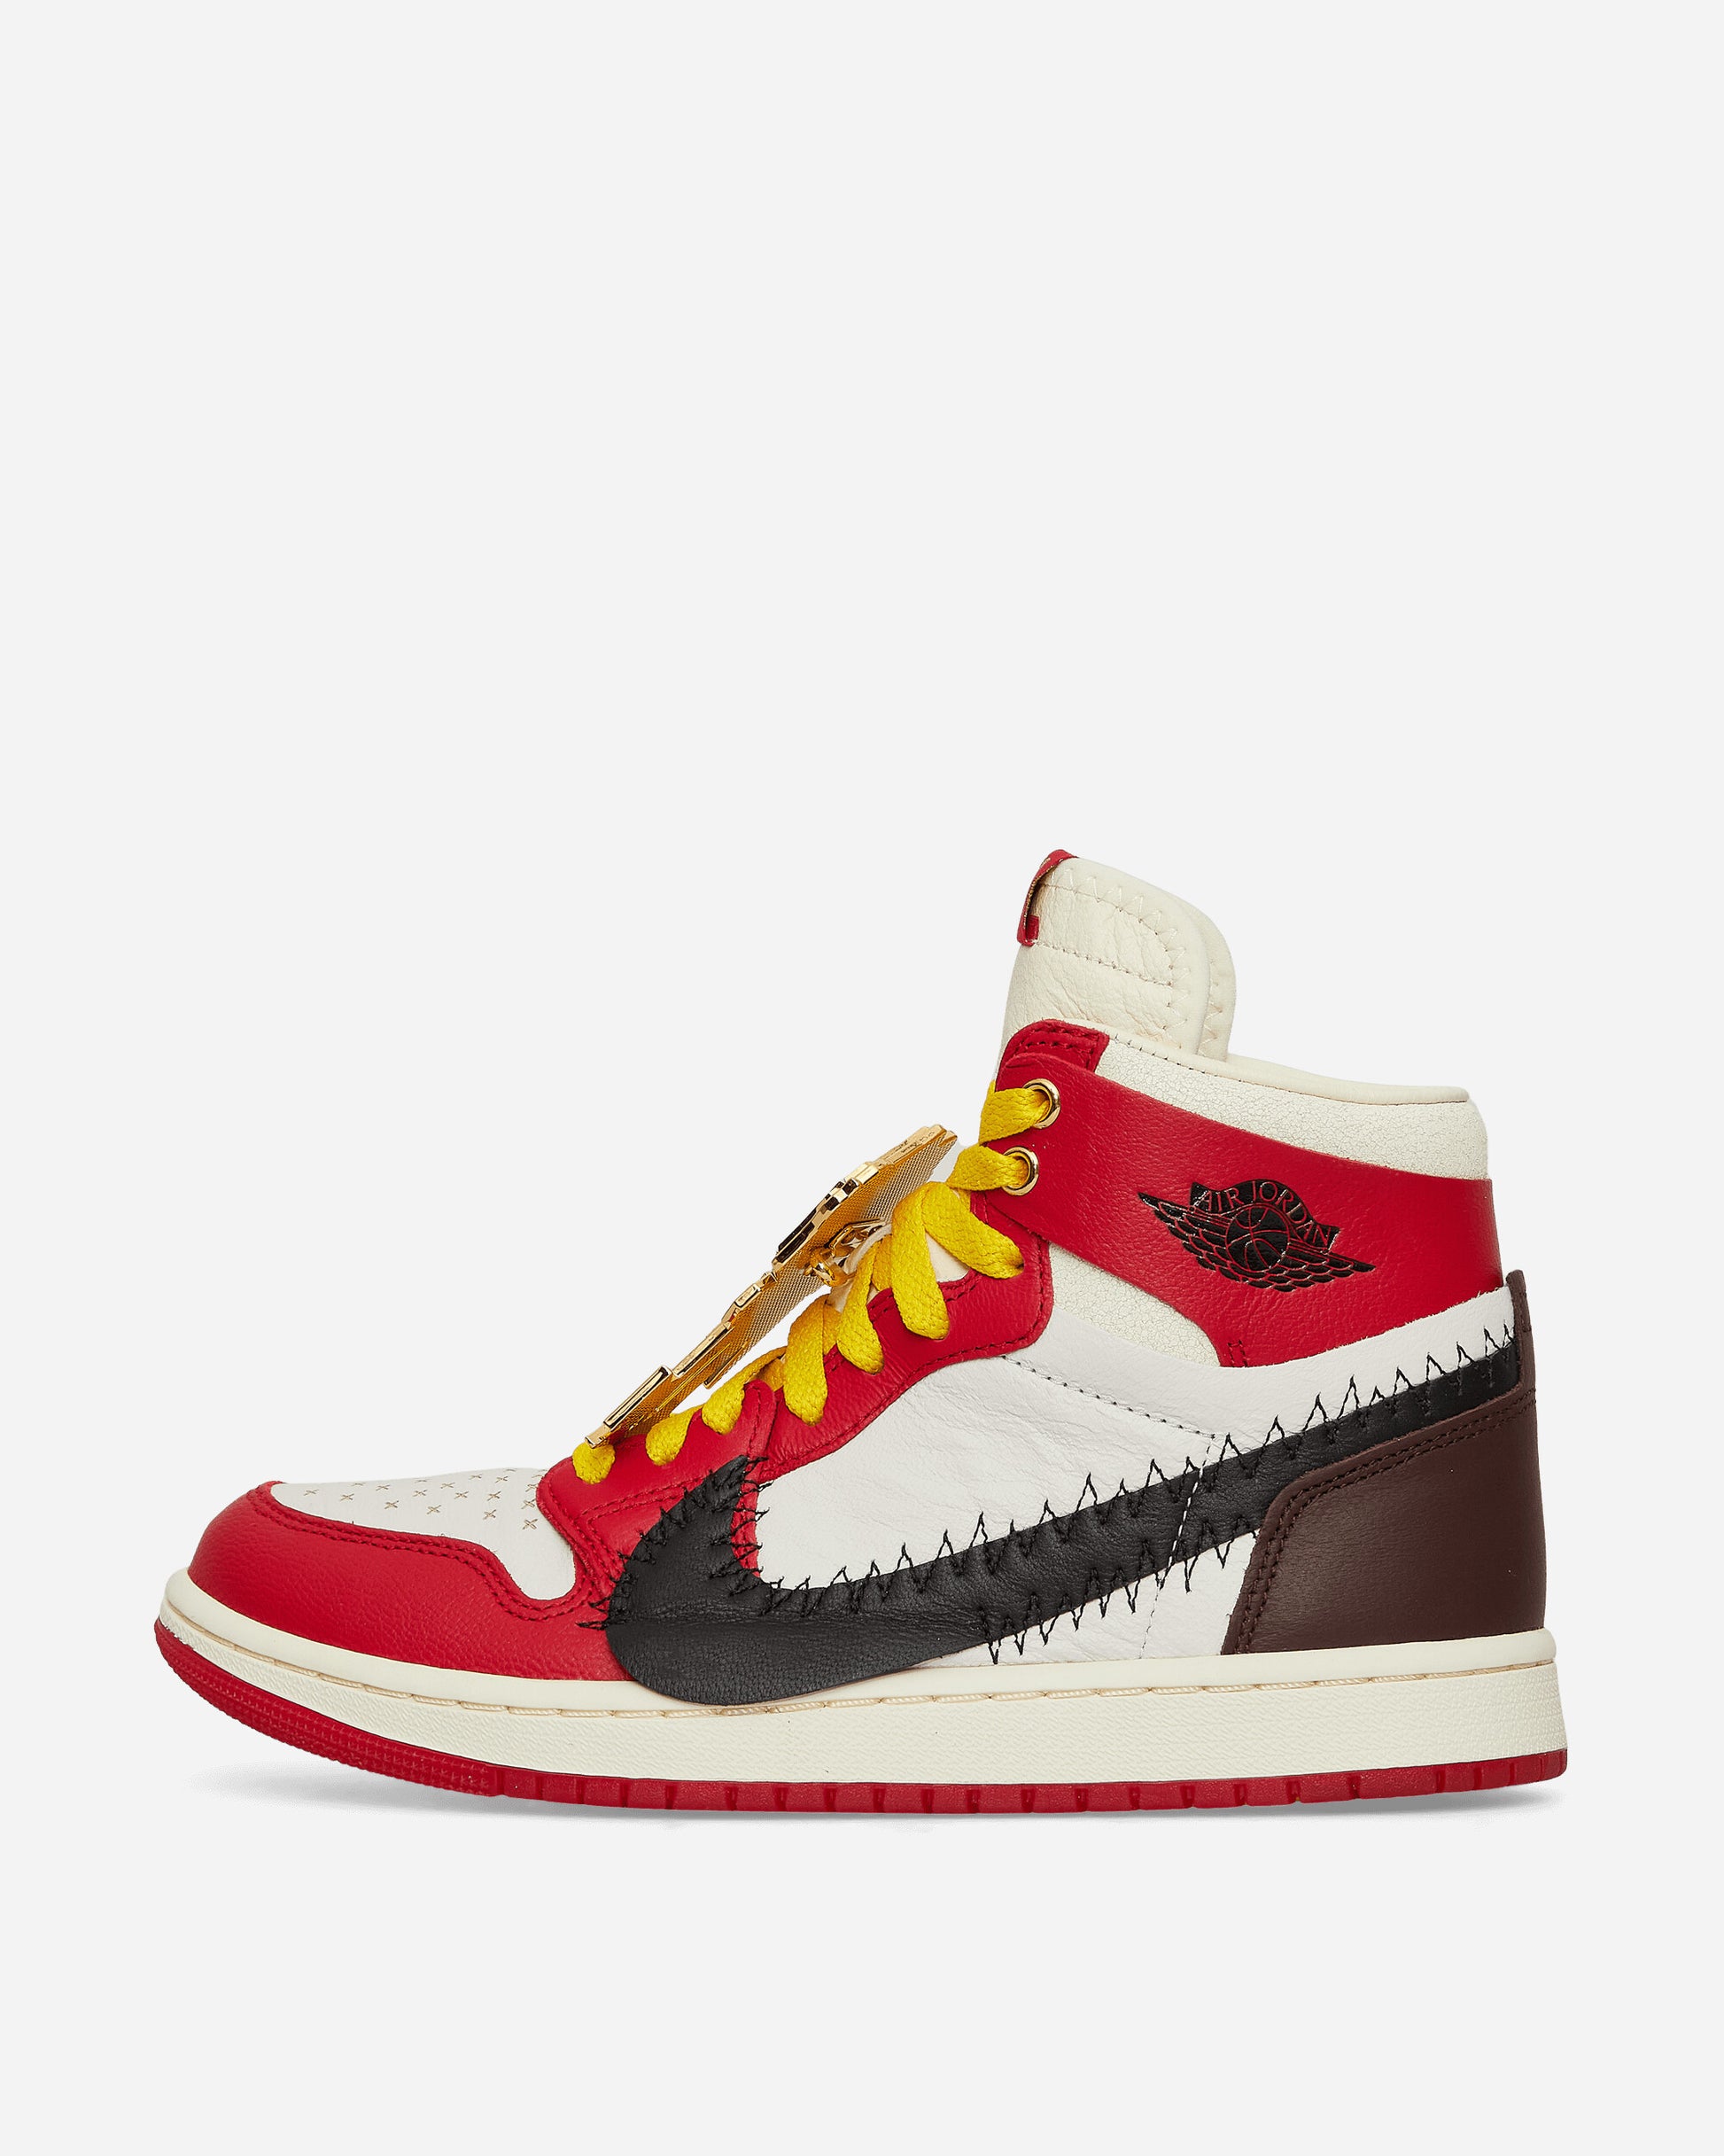 Nike Jordan Wmns W Air Jordan 1 Zm Air Cmf 2 Sp Gym Red/Black-Summit White Sneakers High FJ0604-601